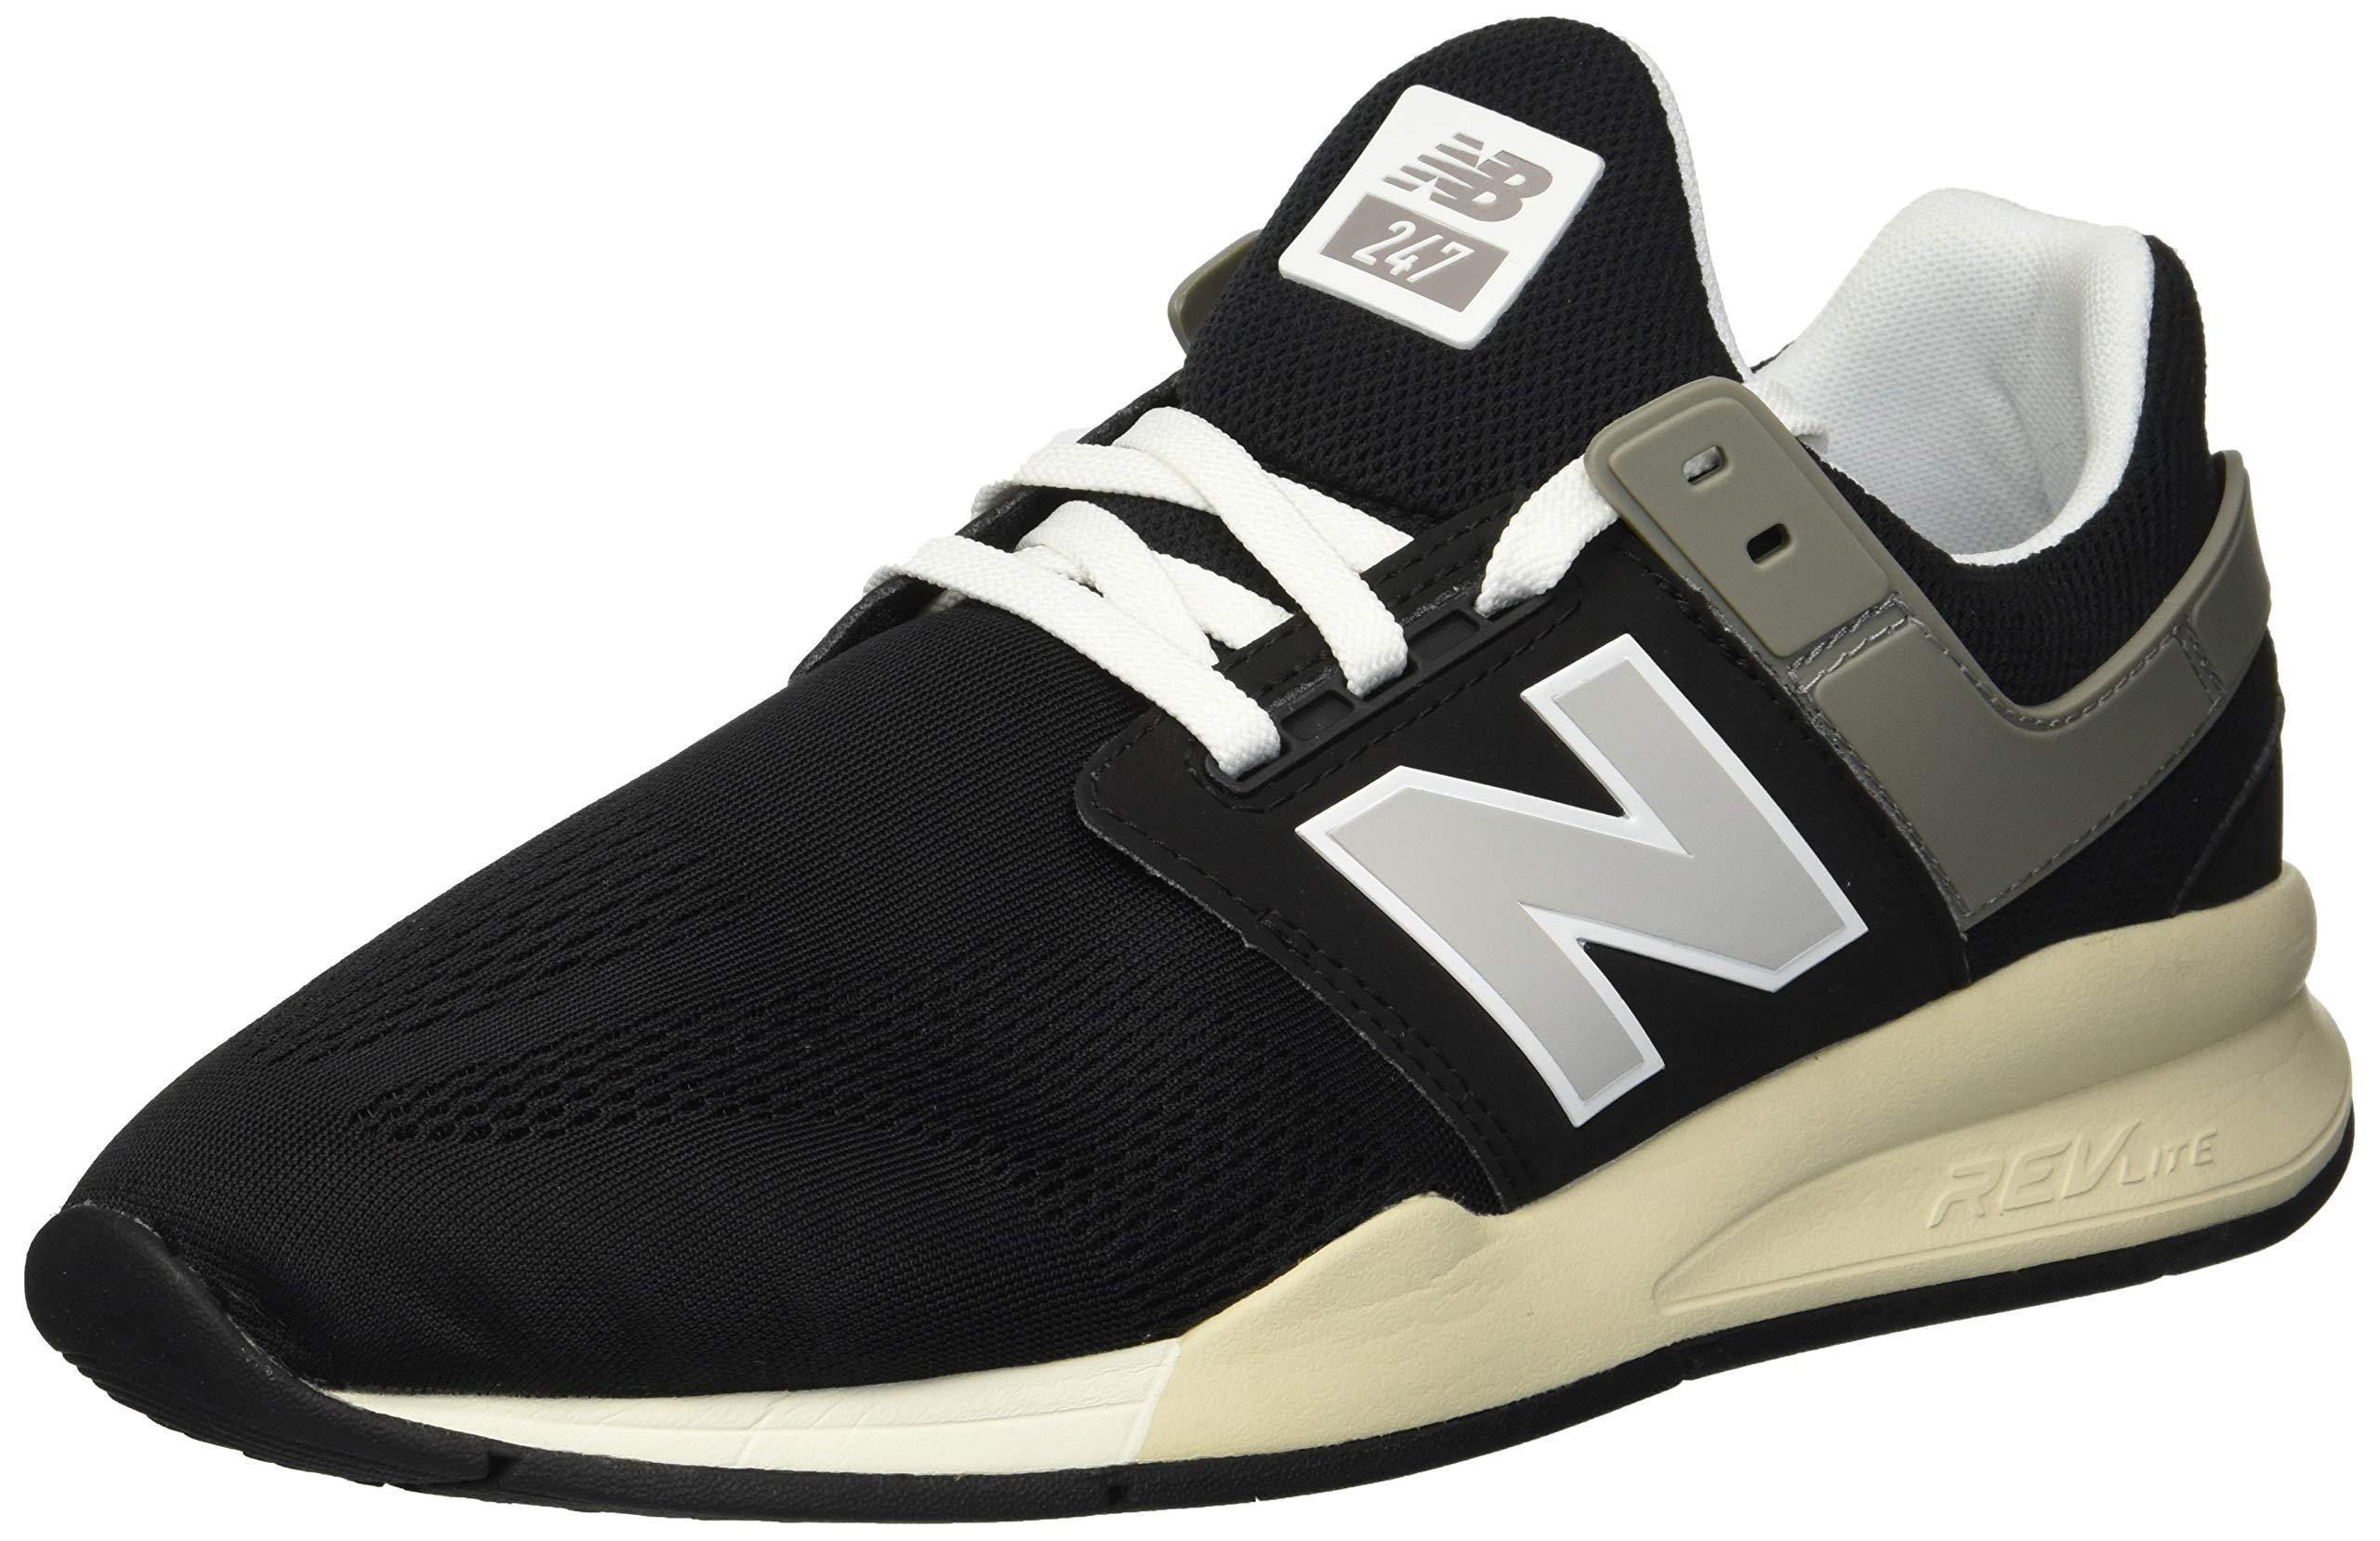 New Balance Synthetic 247 V2 Sneaker in Black/White (Black) for ...